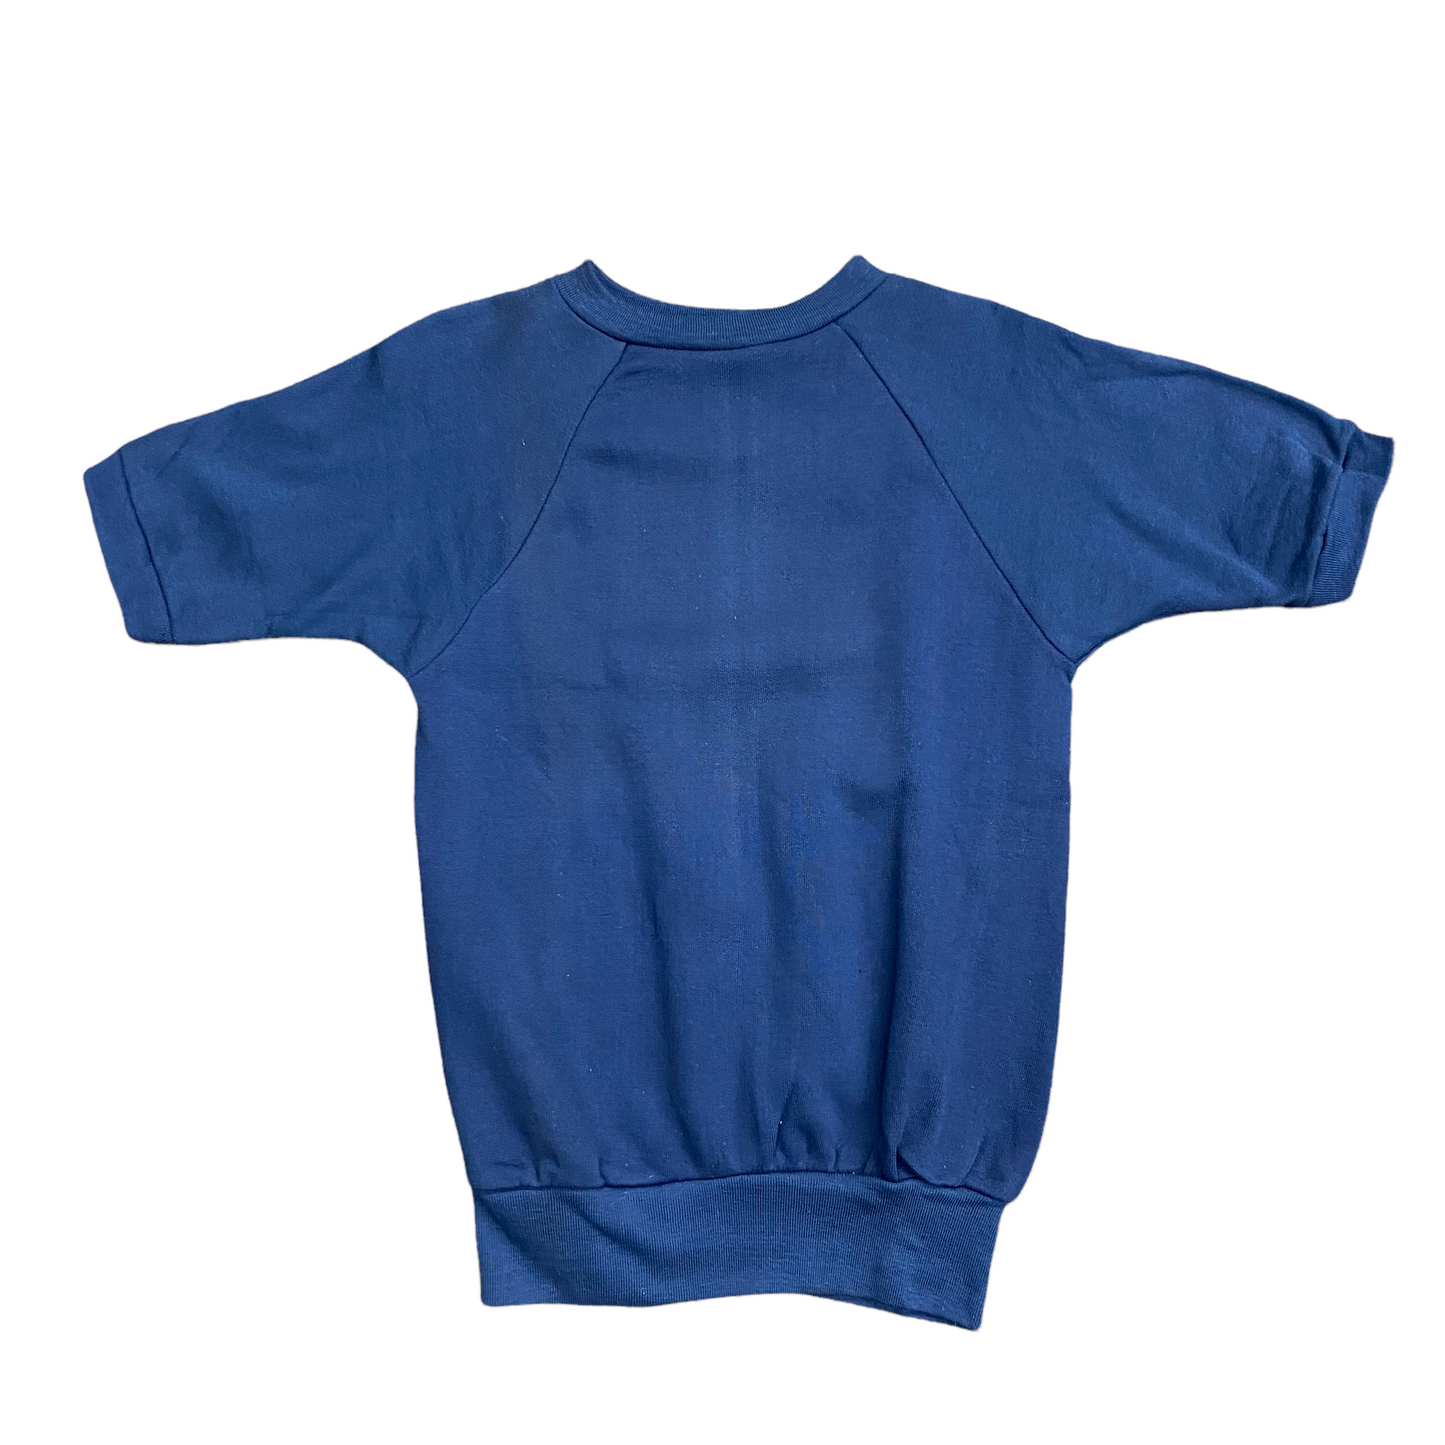 Vintage 1970s Short Sleeve Crewneck Navy Colored Sweatshirt - Size Medium